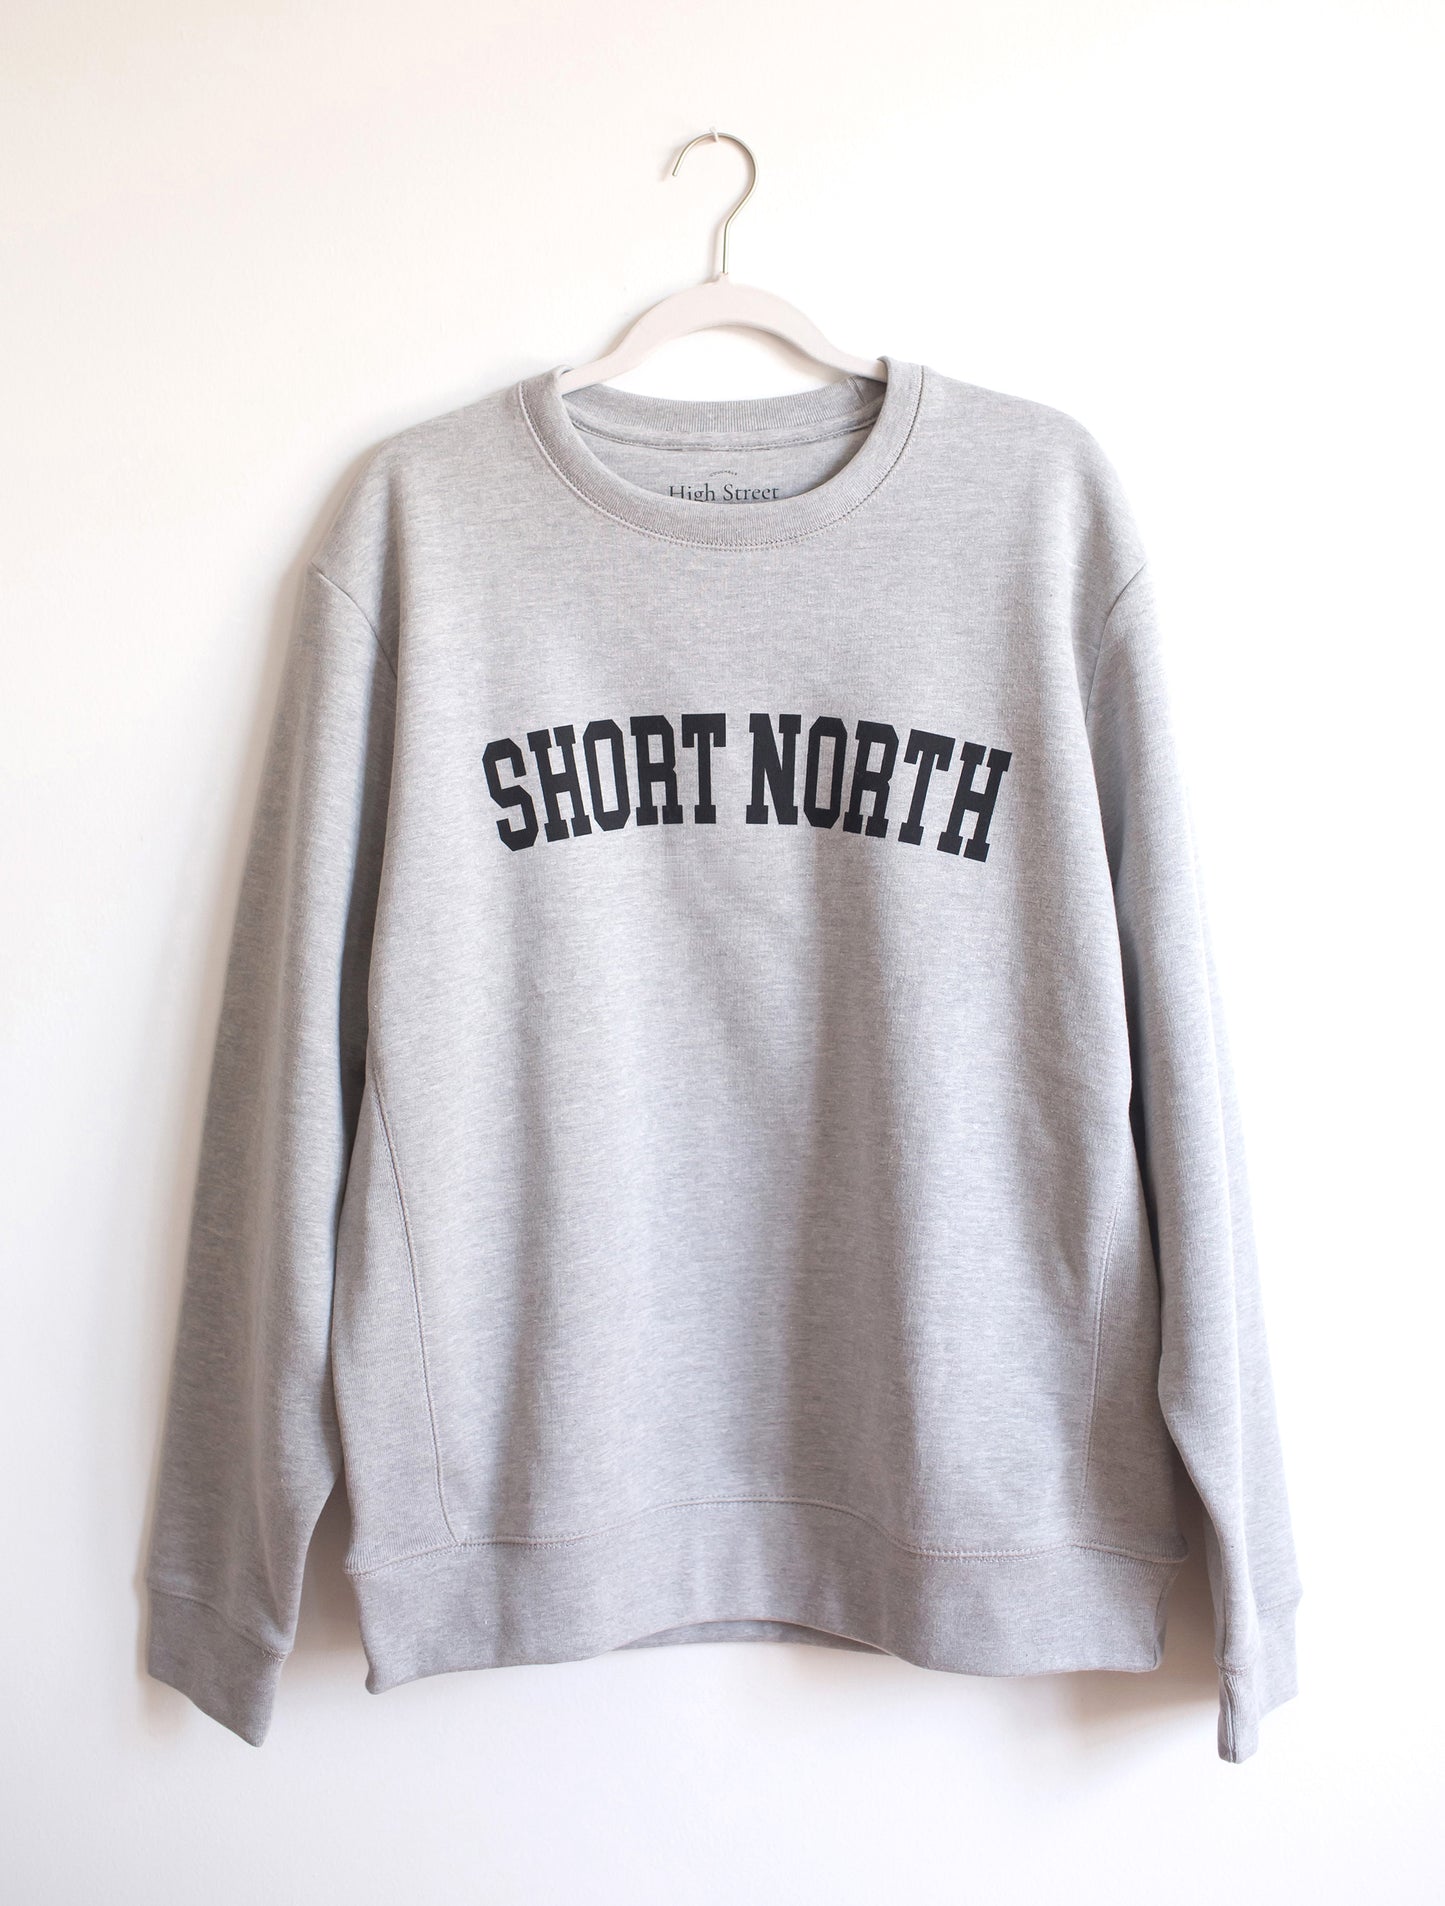 Heather grey cotton crewneck sweatshirt with black Short North graphic at front.